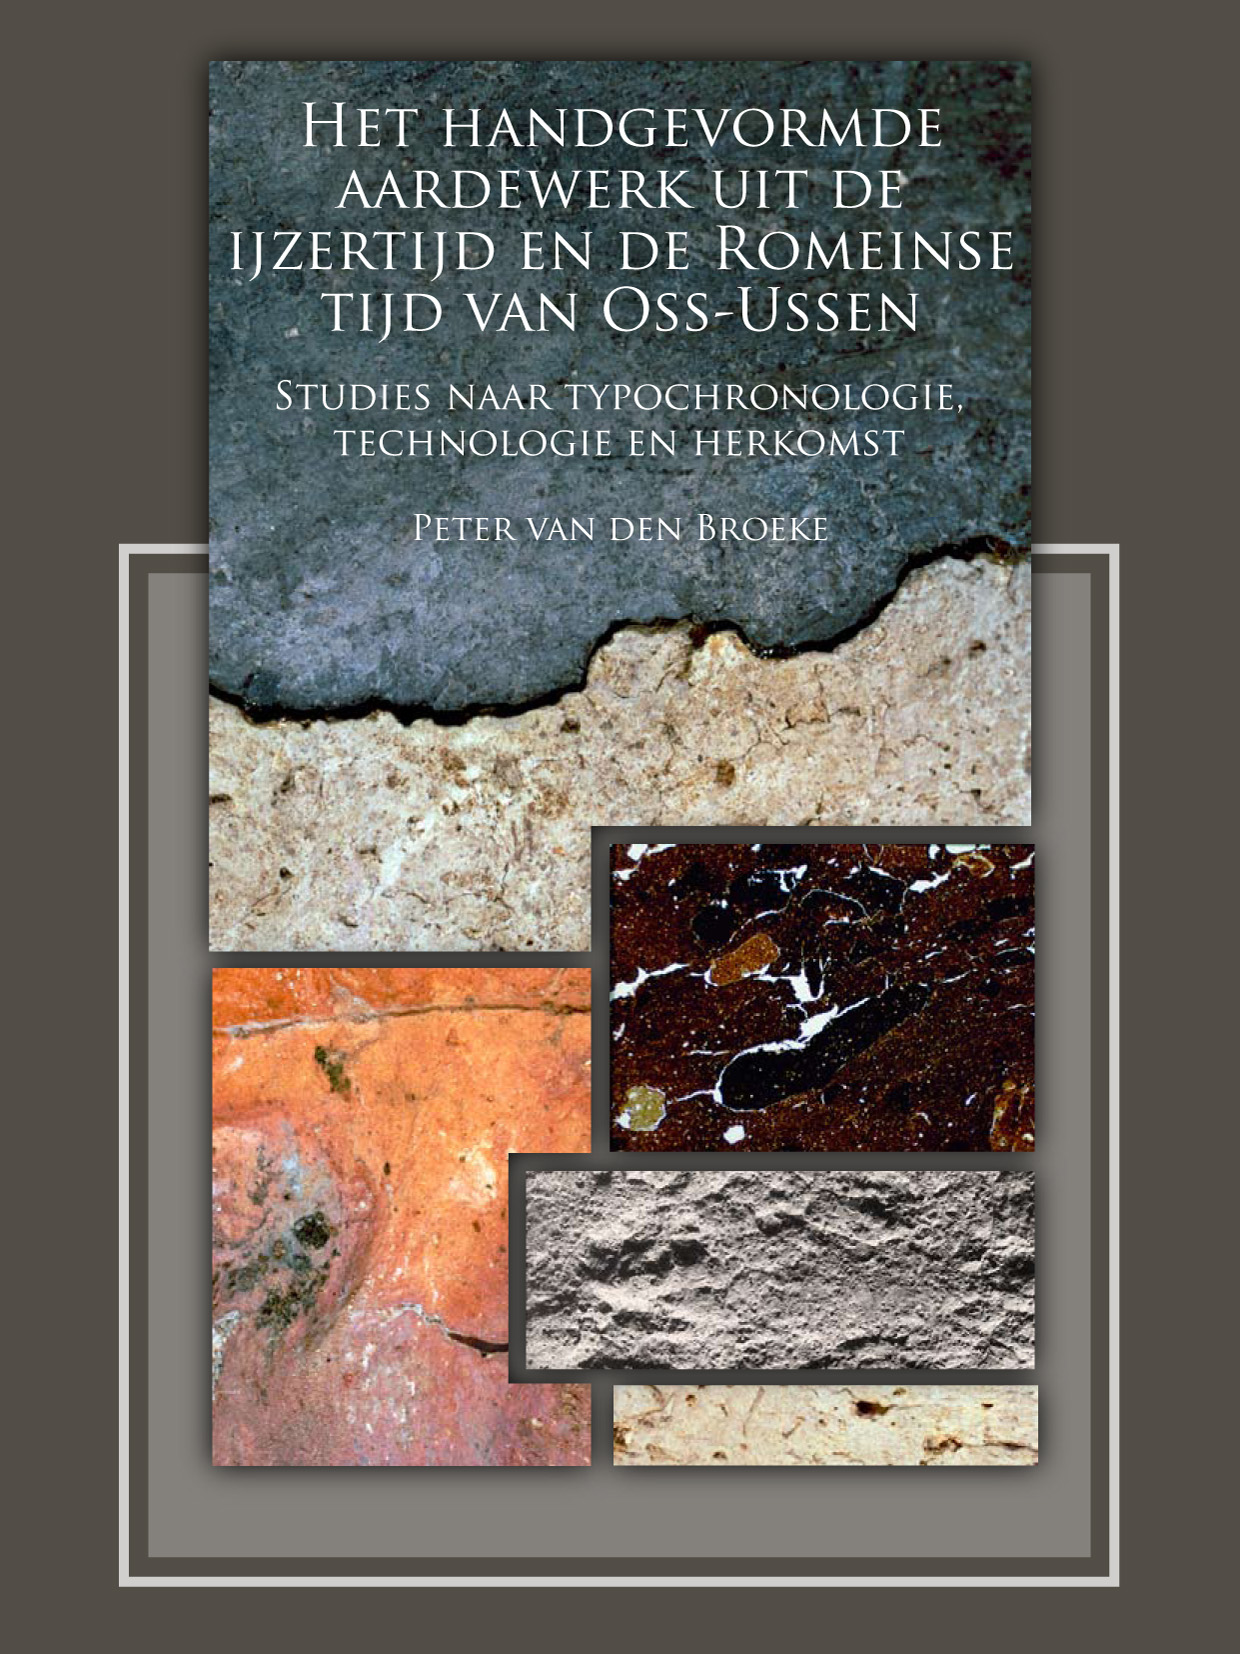 Doctoral dissertation improvement grant archaeology